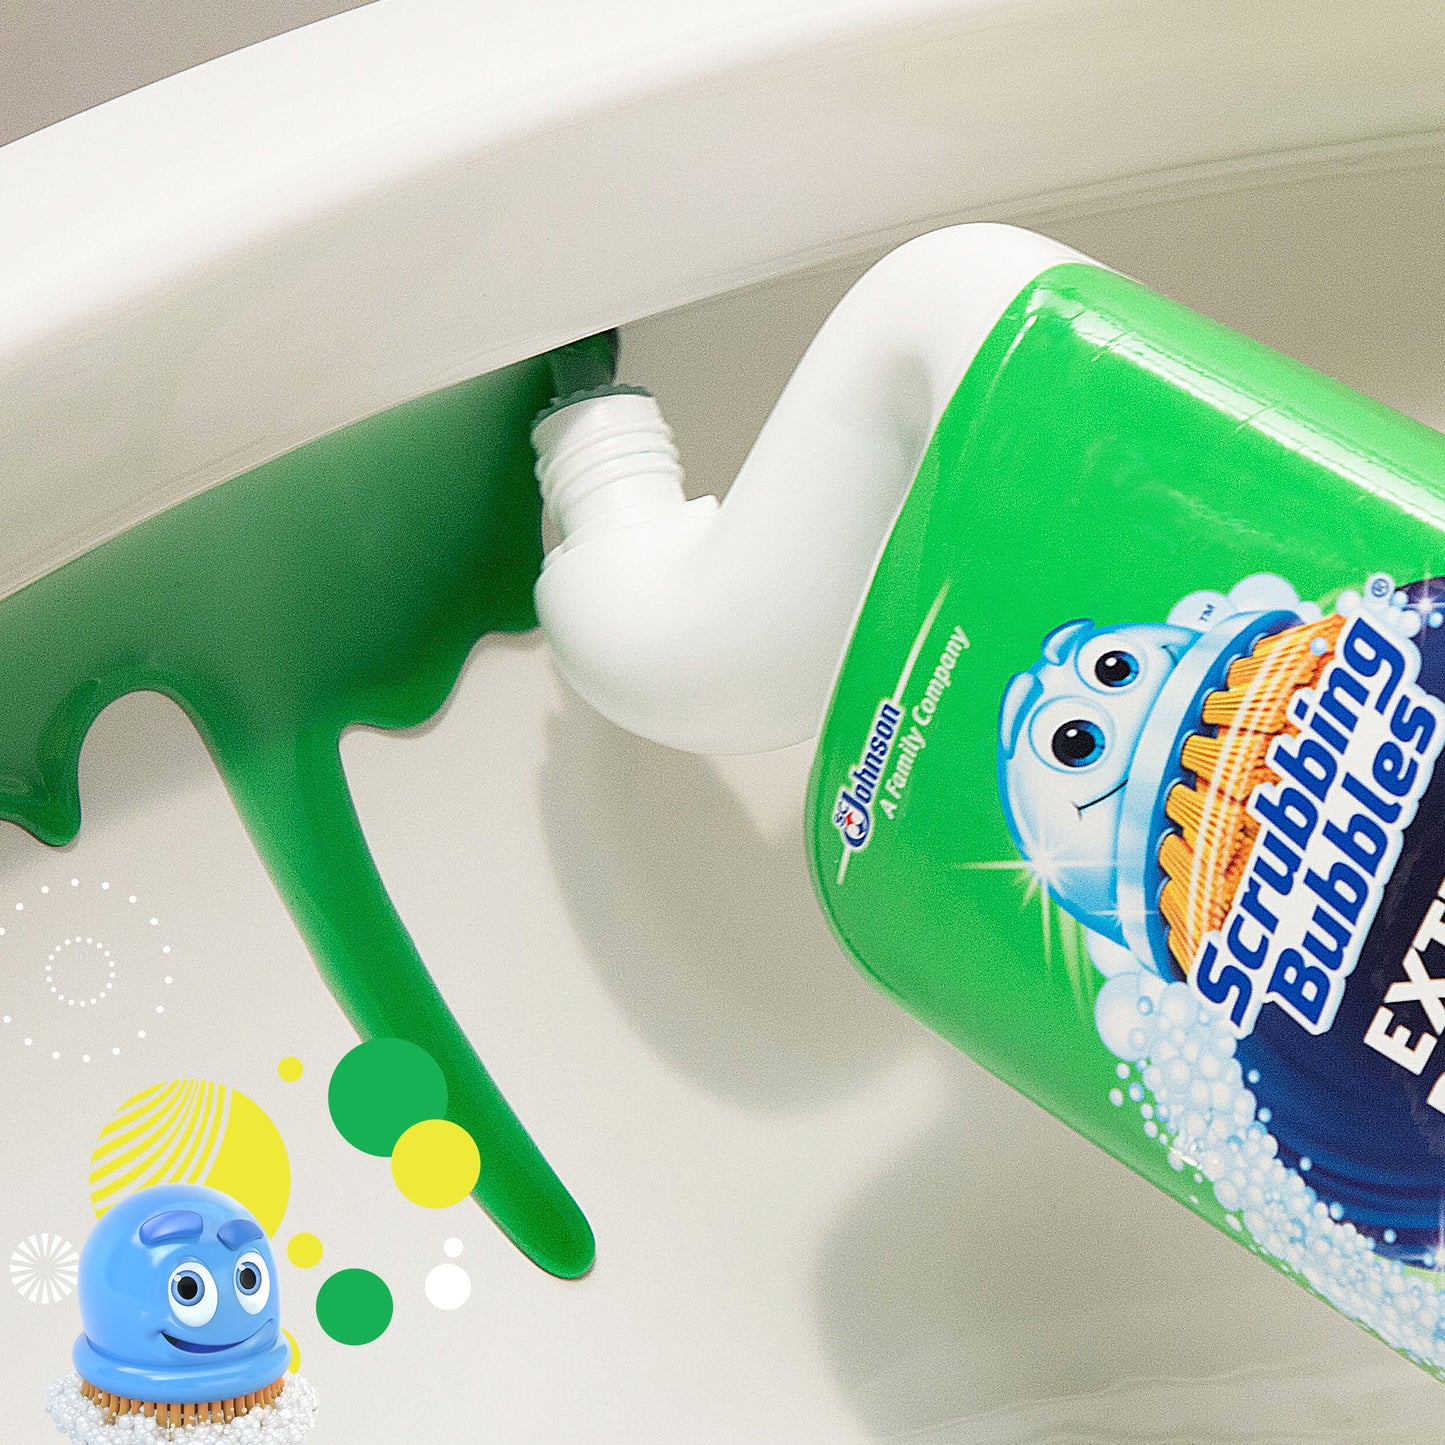 Scrubbing Bubbles Extra Power Stain Destroyer Toilet Bowl Cleaner, Rainshower, 24 oz